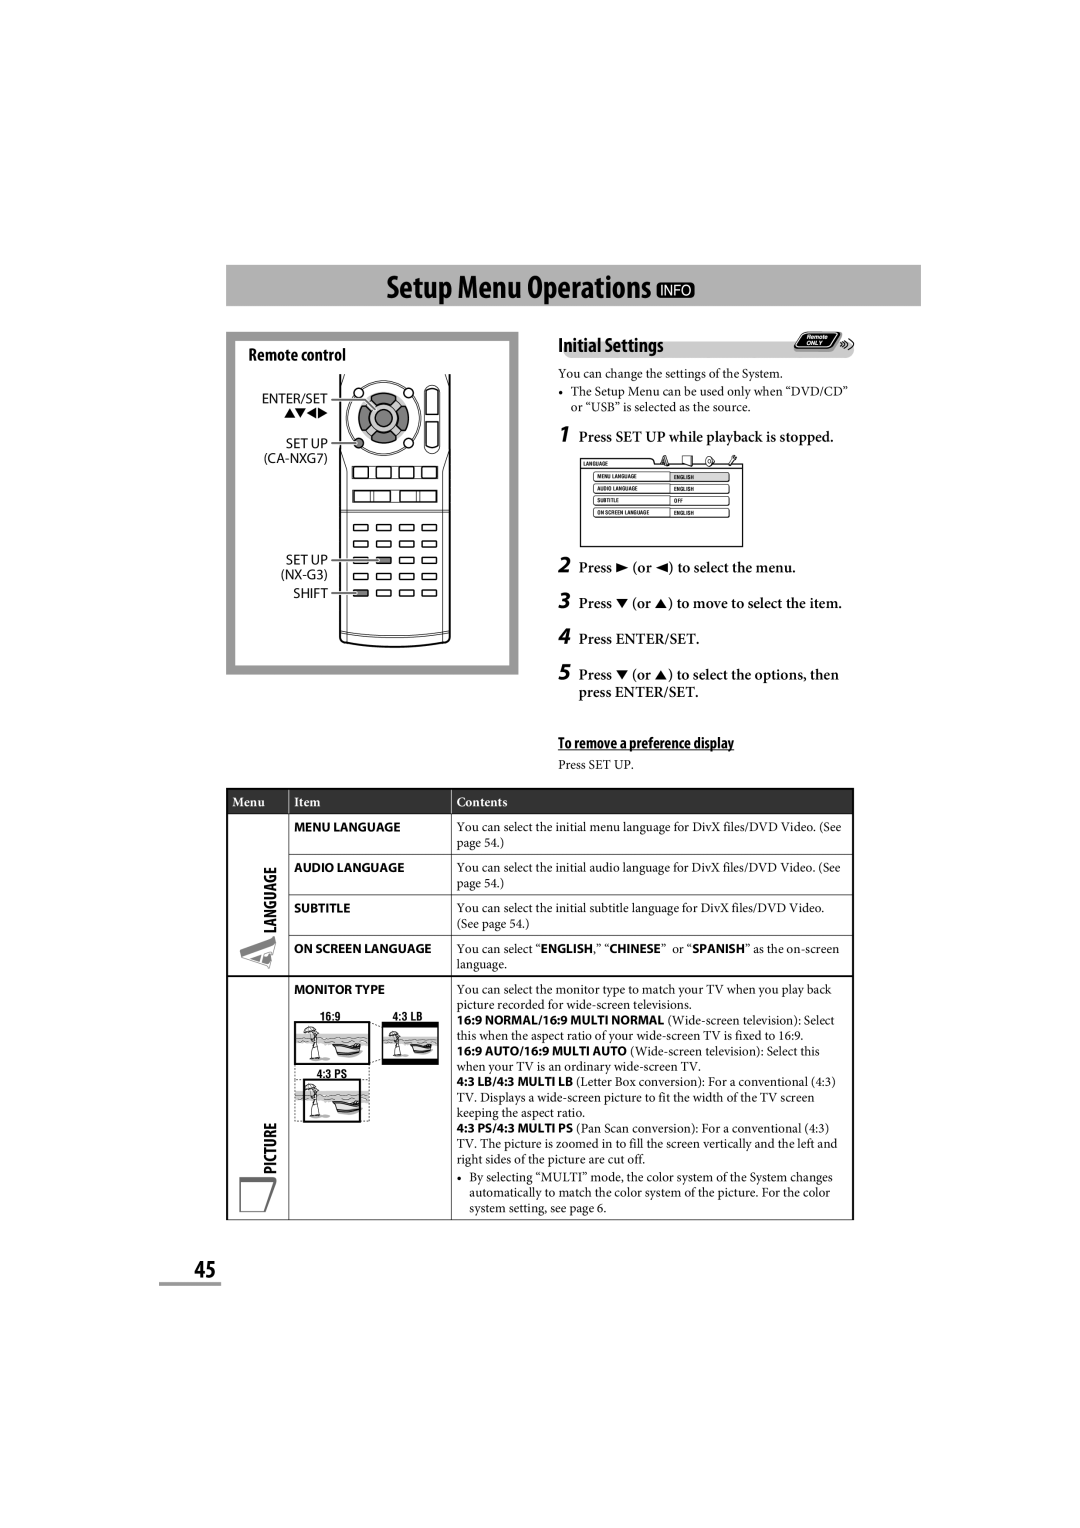 JVC CA-NXG9 manual Setup Menu Operations, Initial Settings, Remote control, Language Picture, Item, Contents 